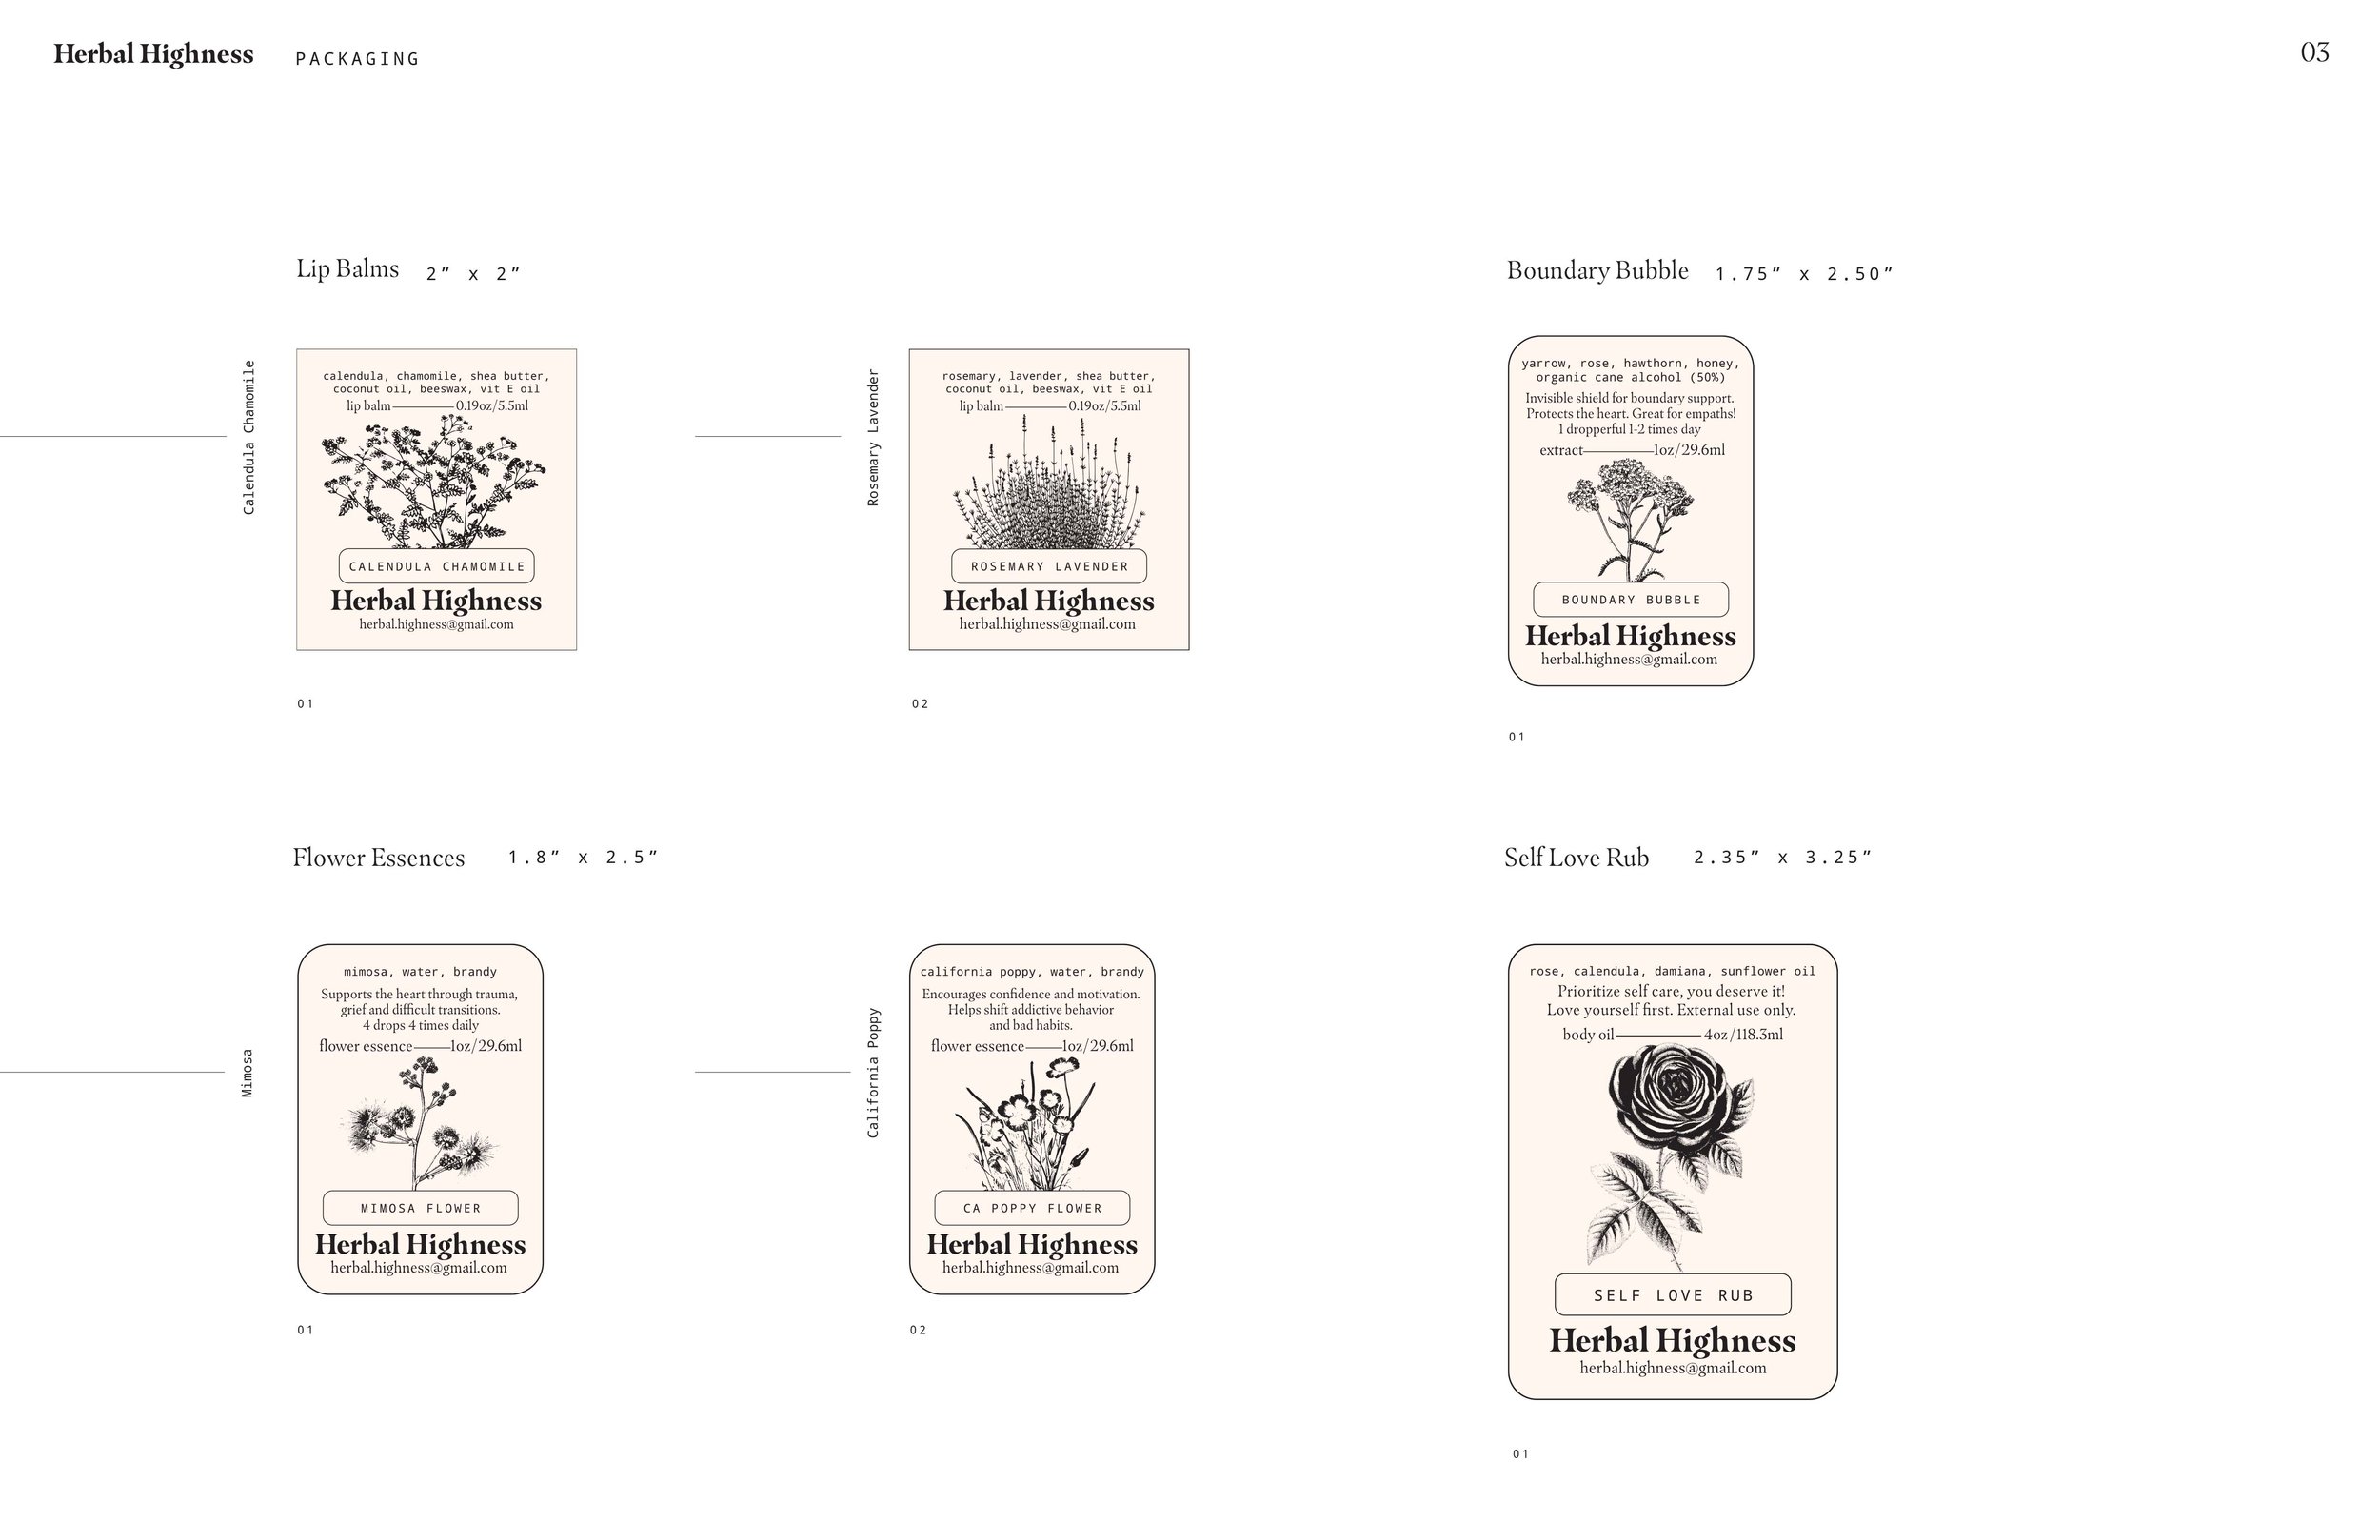 HerbalHighness_Identity_Packaging_Overview-3.jpg